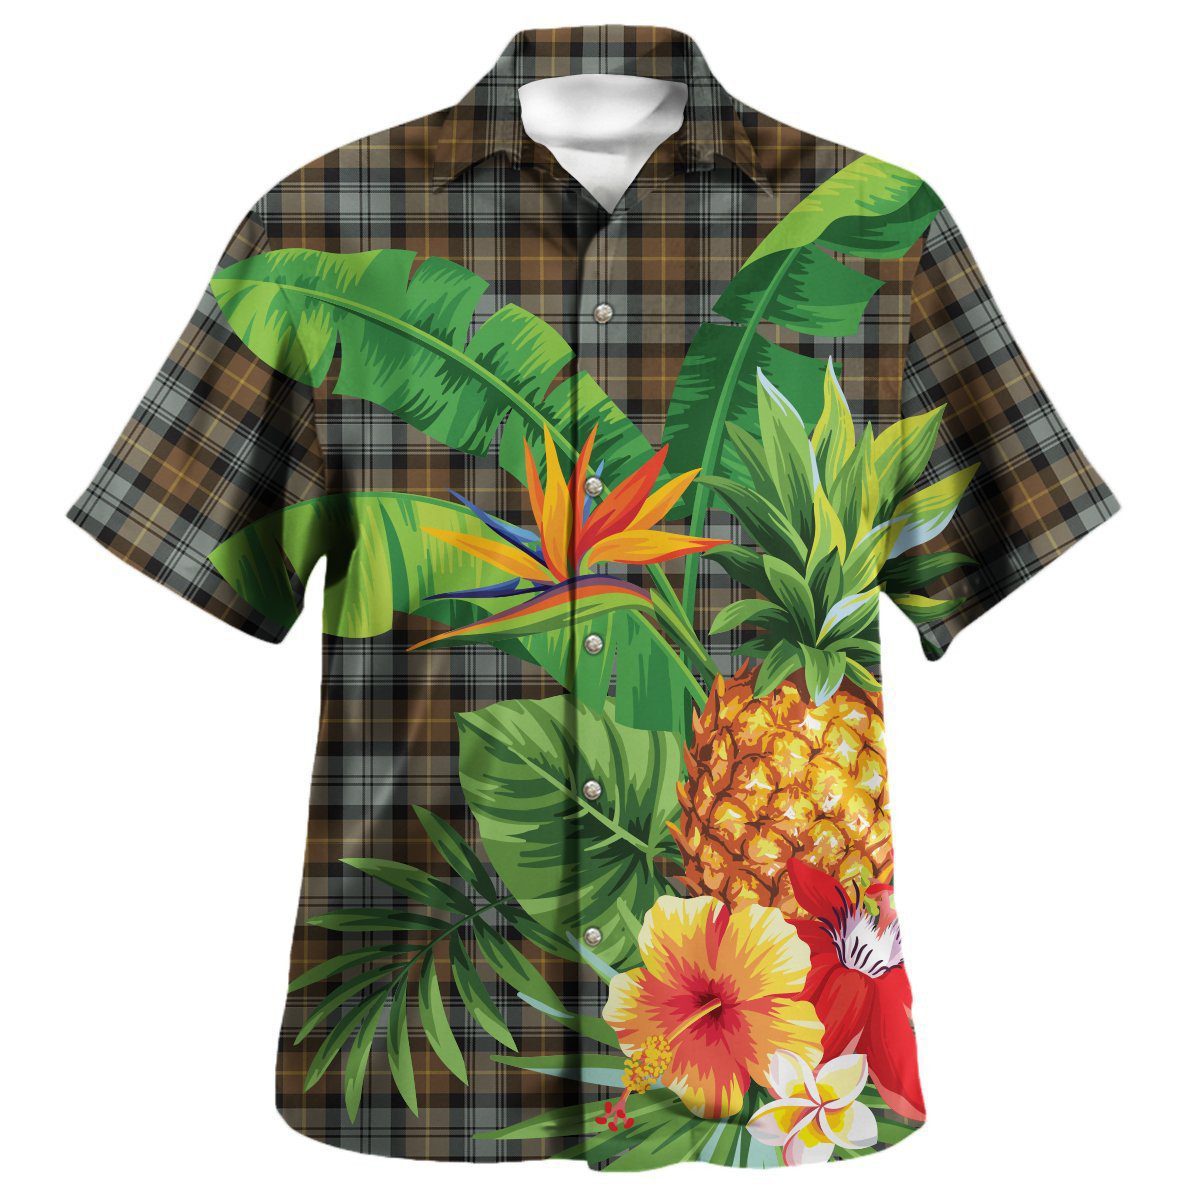 Gordon Weathered Tartan Aloha Shirt version 2